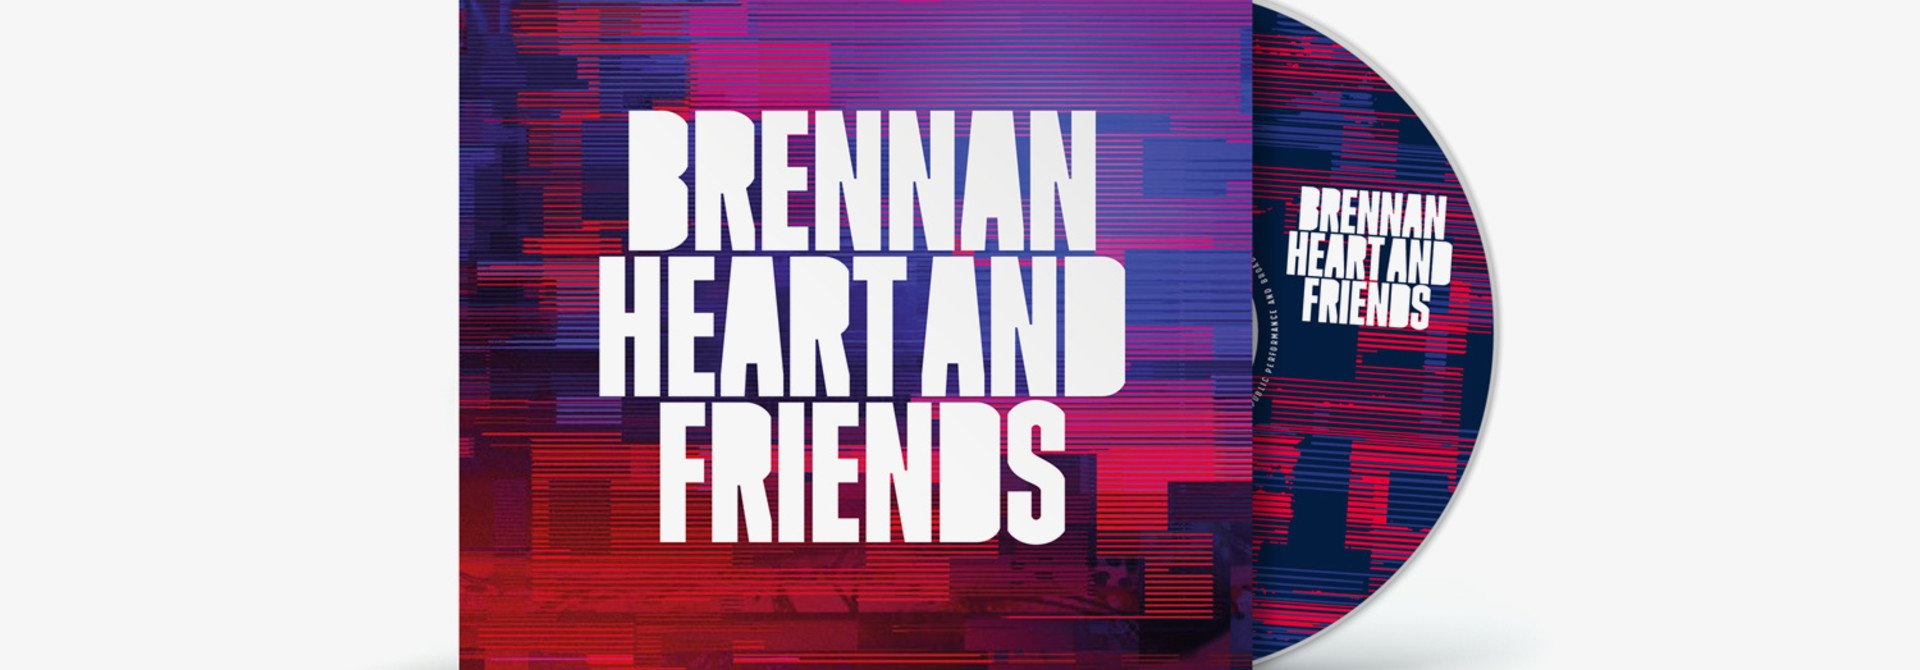 Brennan Heart & Friends (Album)